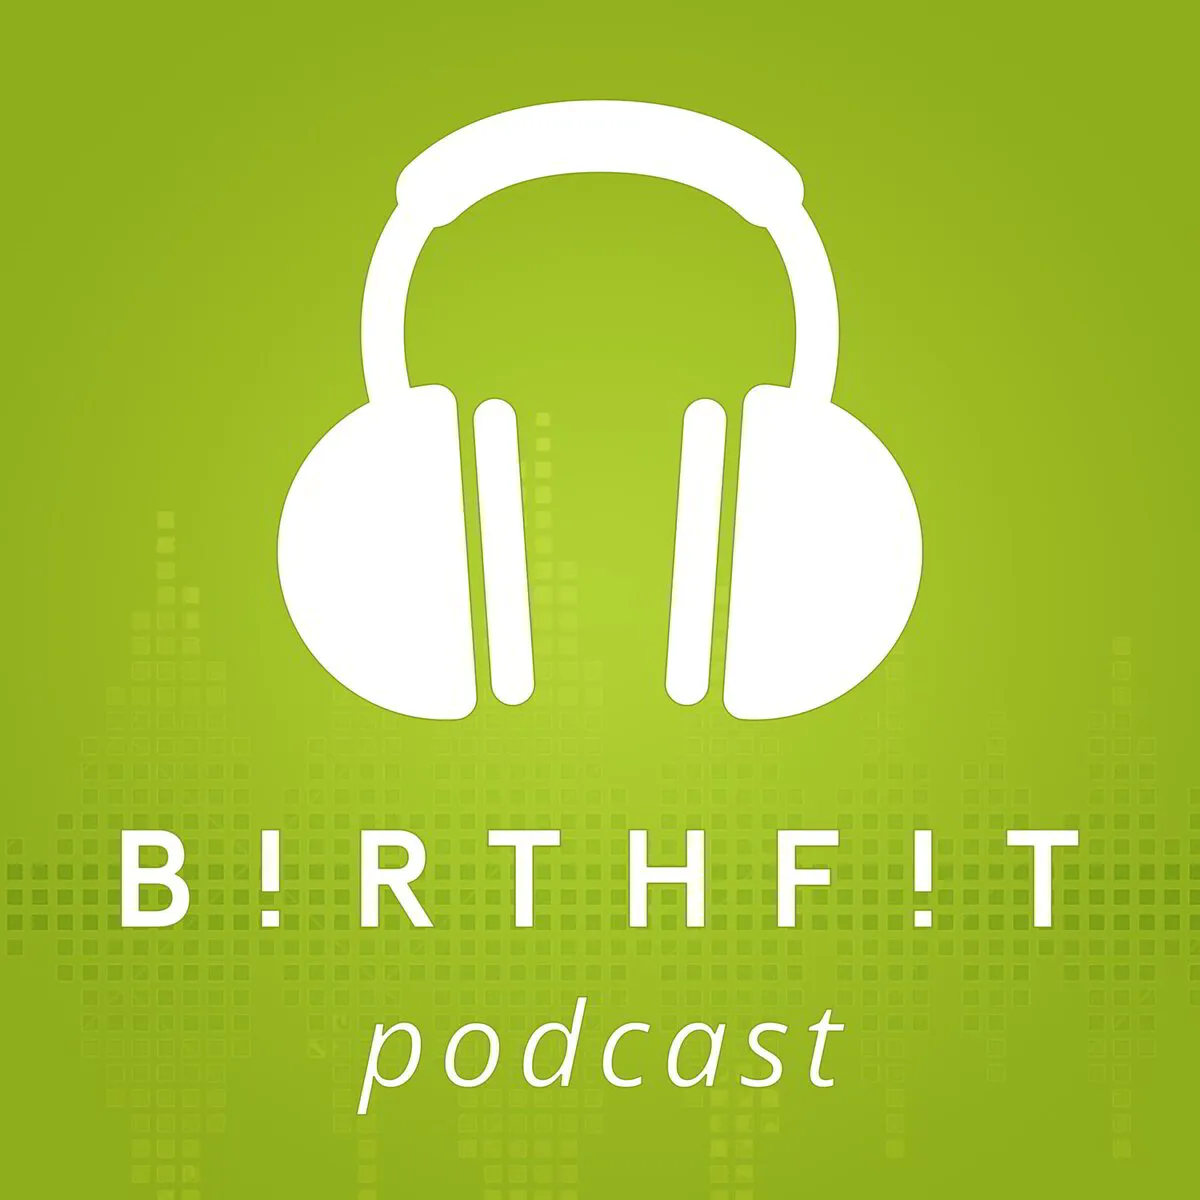 BIRTHFIT Podcast Episode 93 Featuring Jennifer Mercier